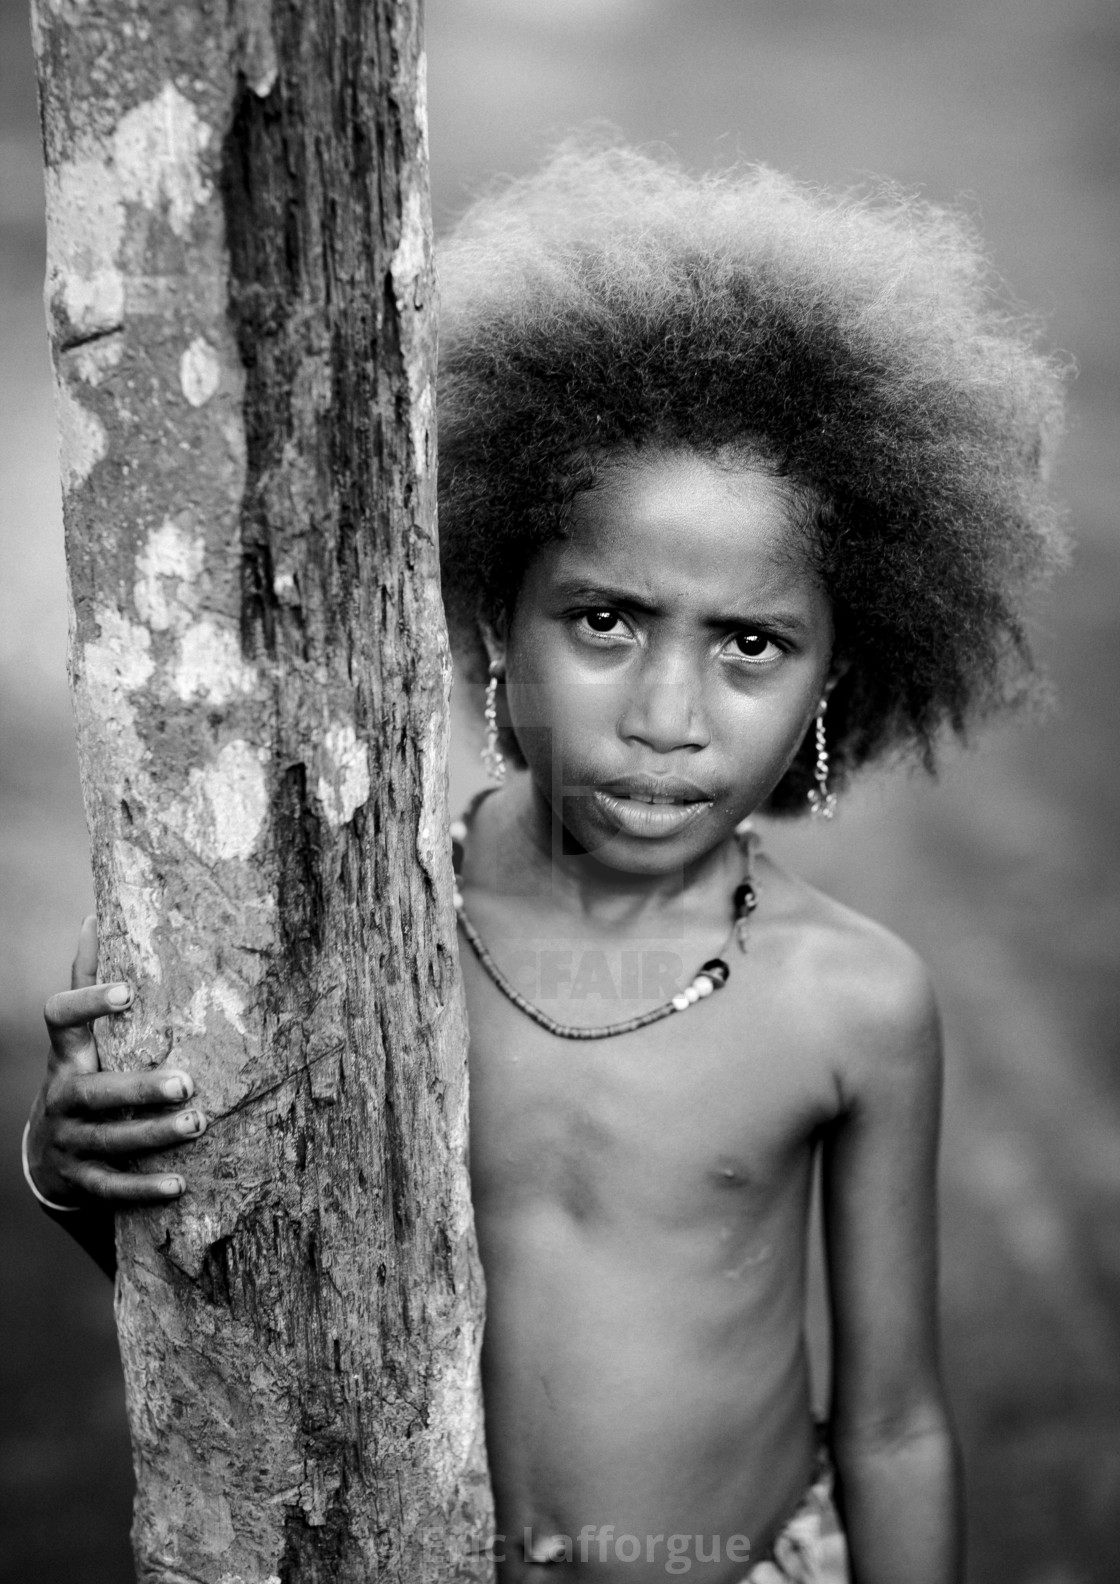 Islander Girl With Blonde Hair Trobriand Island Papua New Guinea